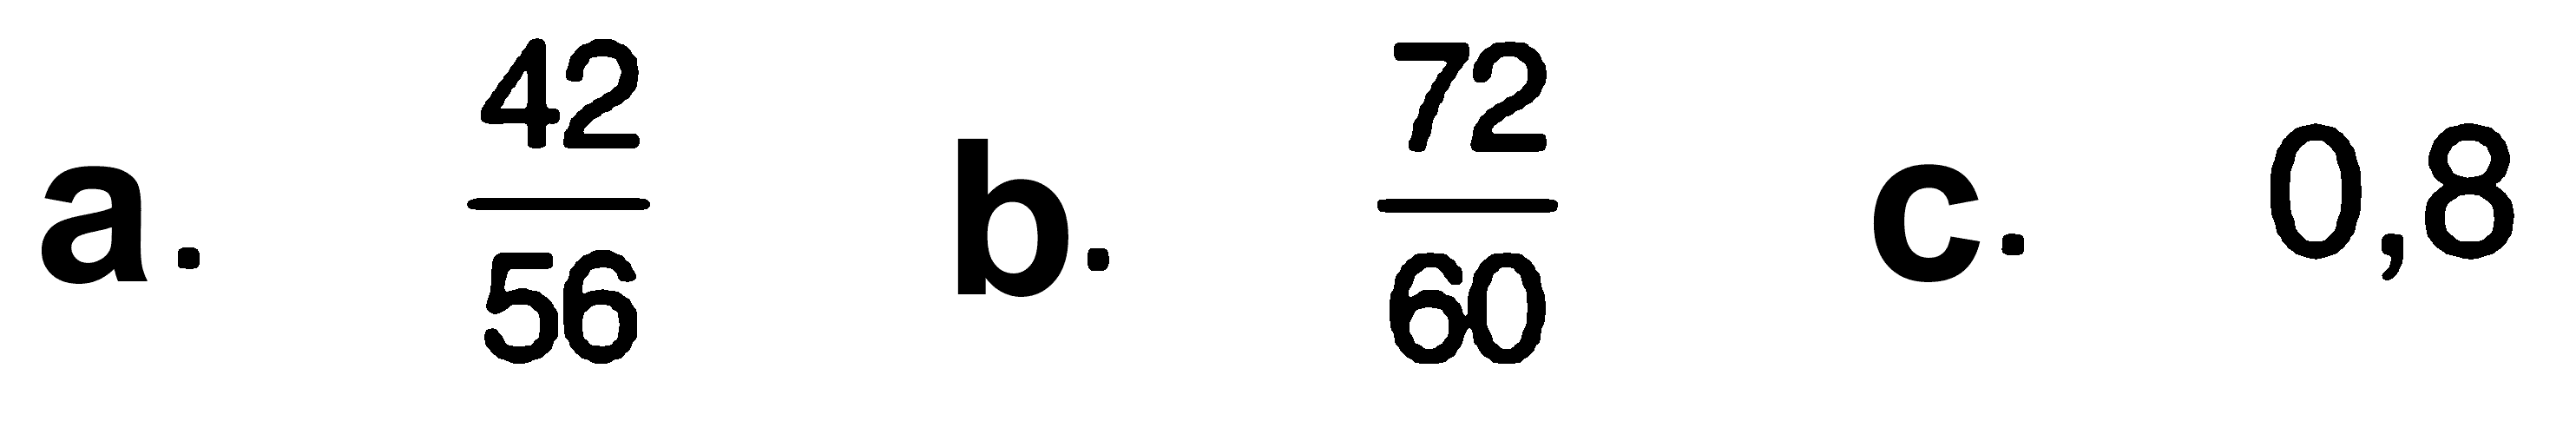 a. 42/56 b. 72/60 c. 0,8